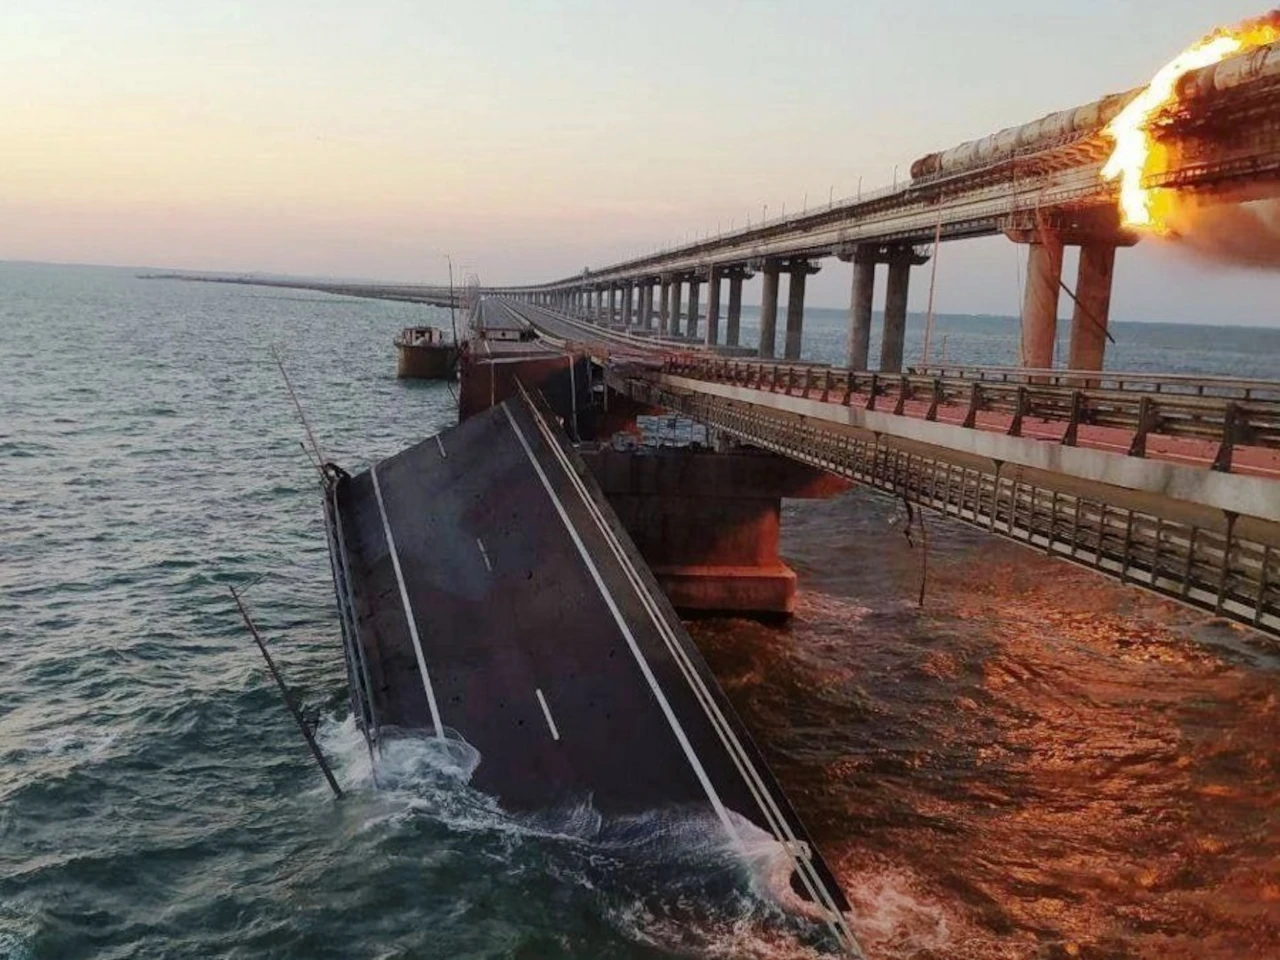 Section of the damaged Crimean bridge